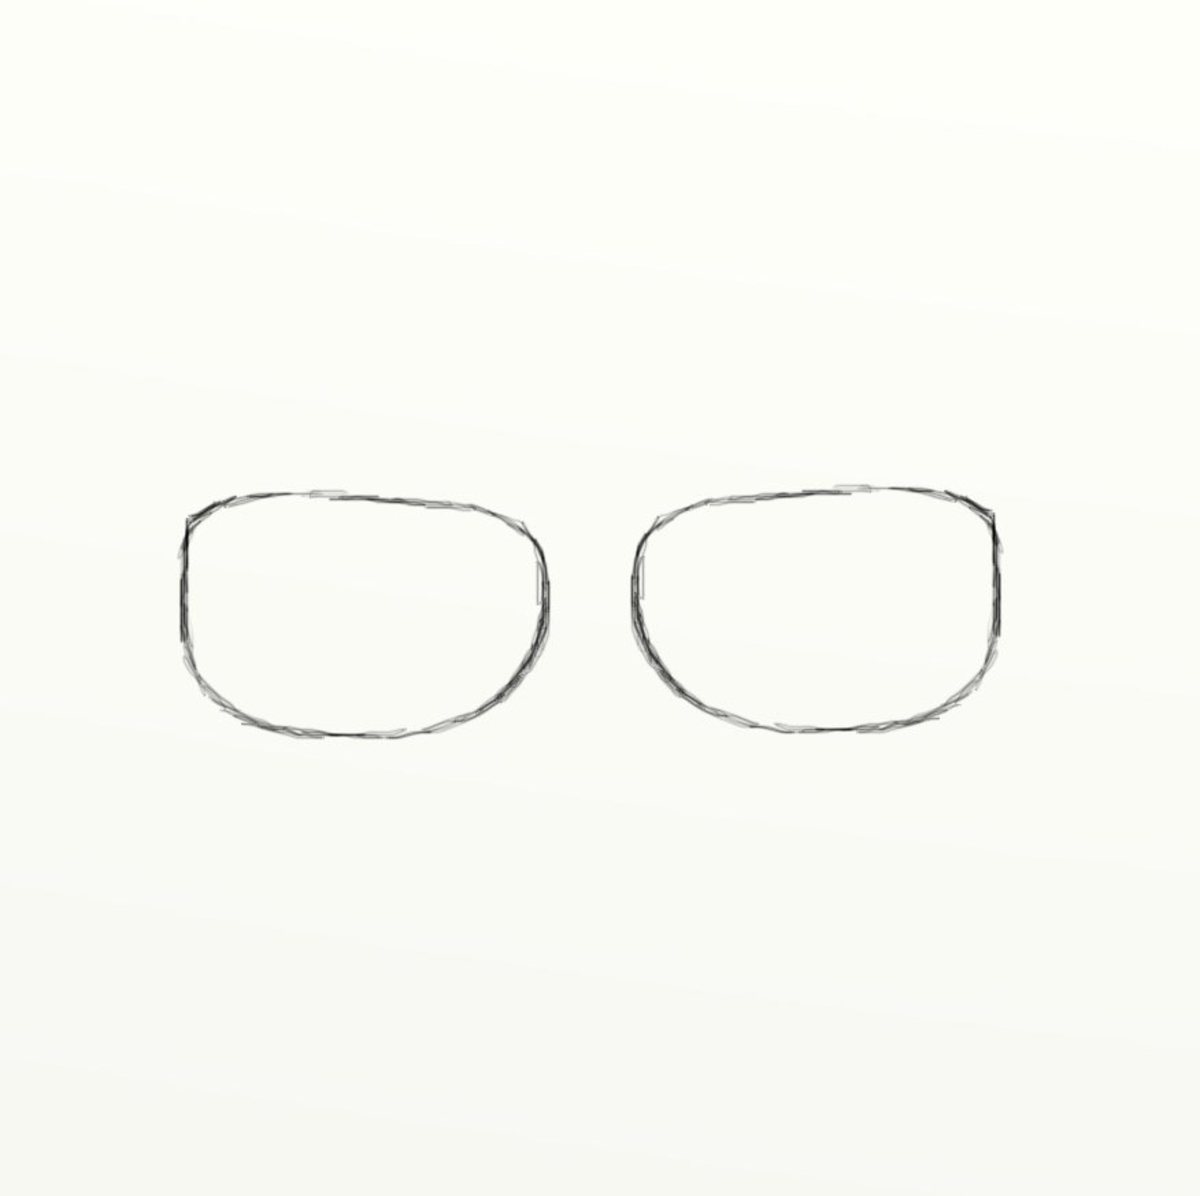 Black Doodle Glasses Icon Eyeglasses and Sunglasses Illustration Stock  Vector  Illustration of doodle outline 234718618